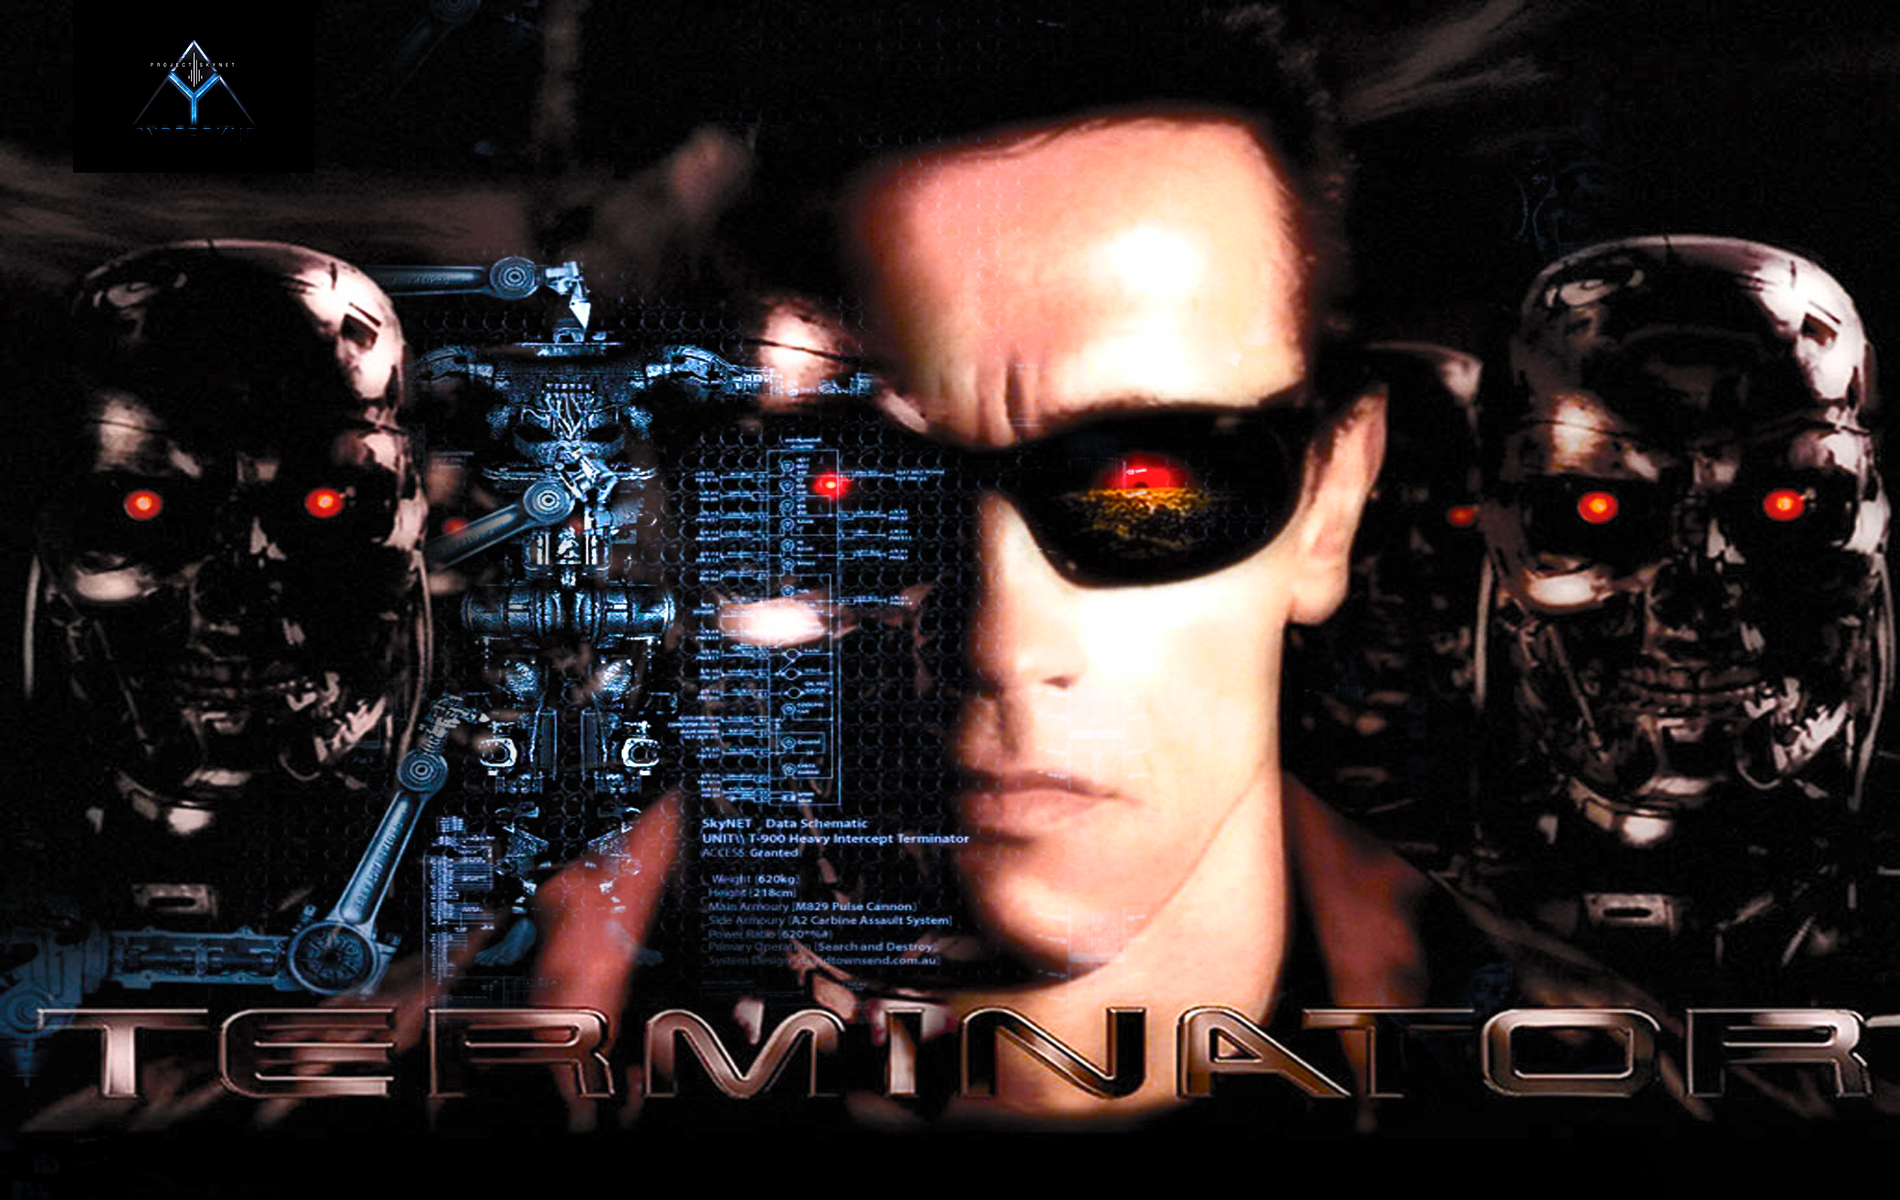 Arnold Terminator Puter Wallpaper Desktop Background